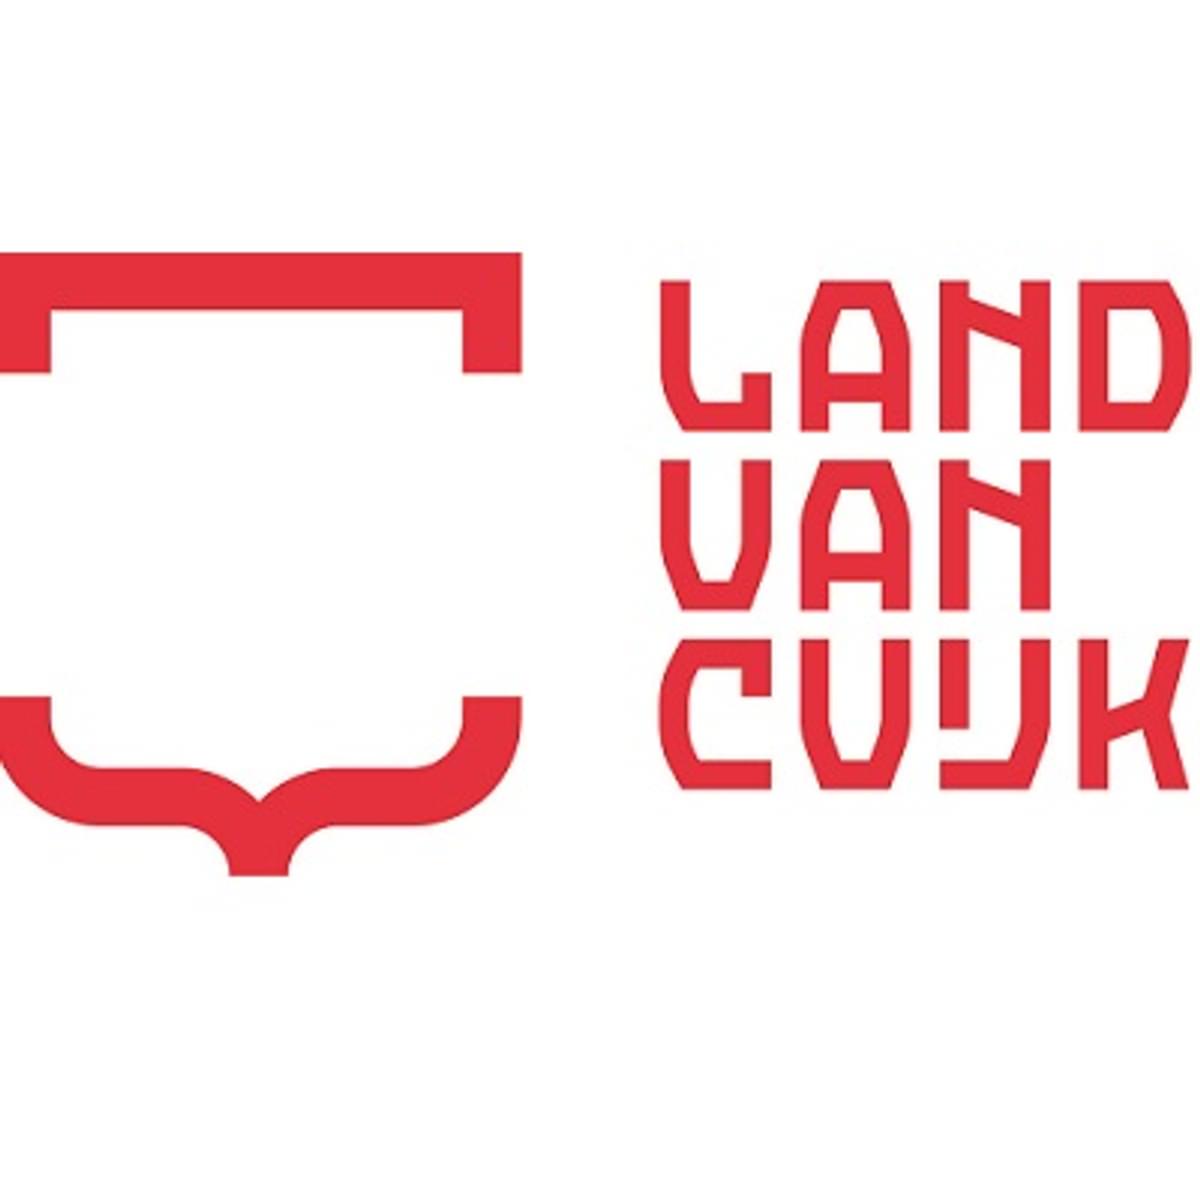 Land van Cuijk gunt Protinus IT aanbesteding Raamovereenkomst licenties LvC image